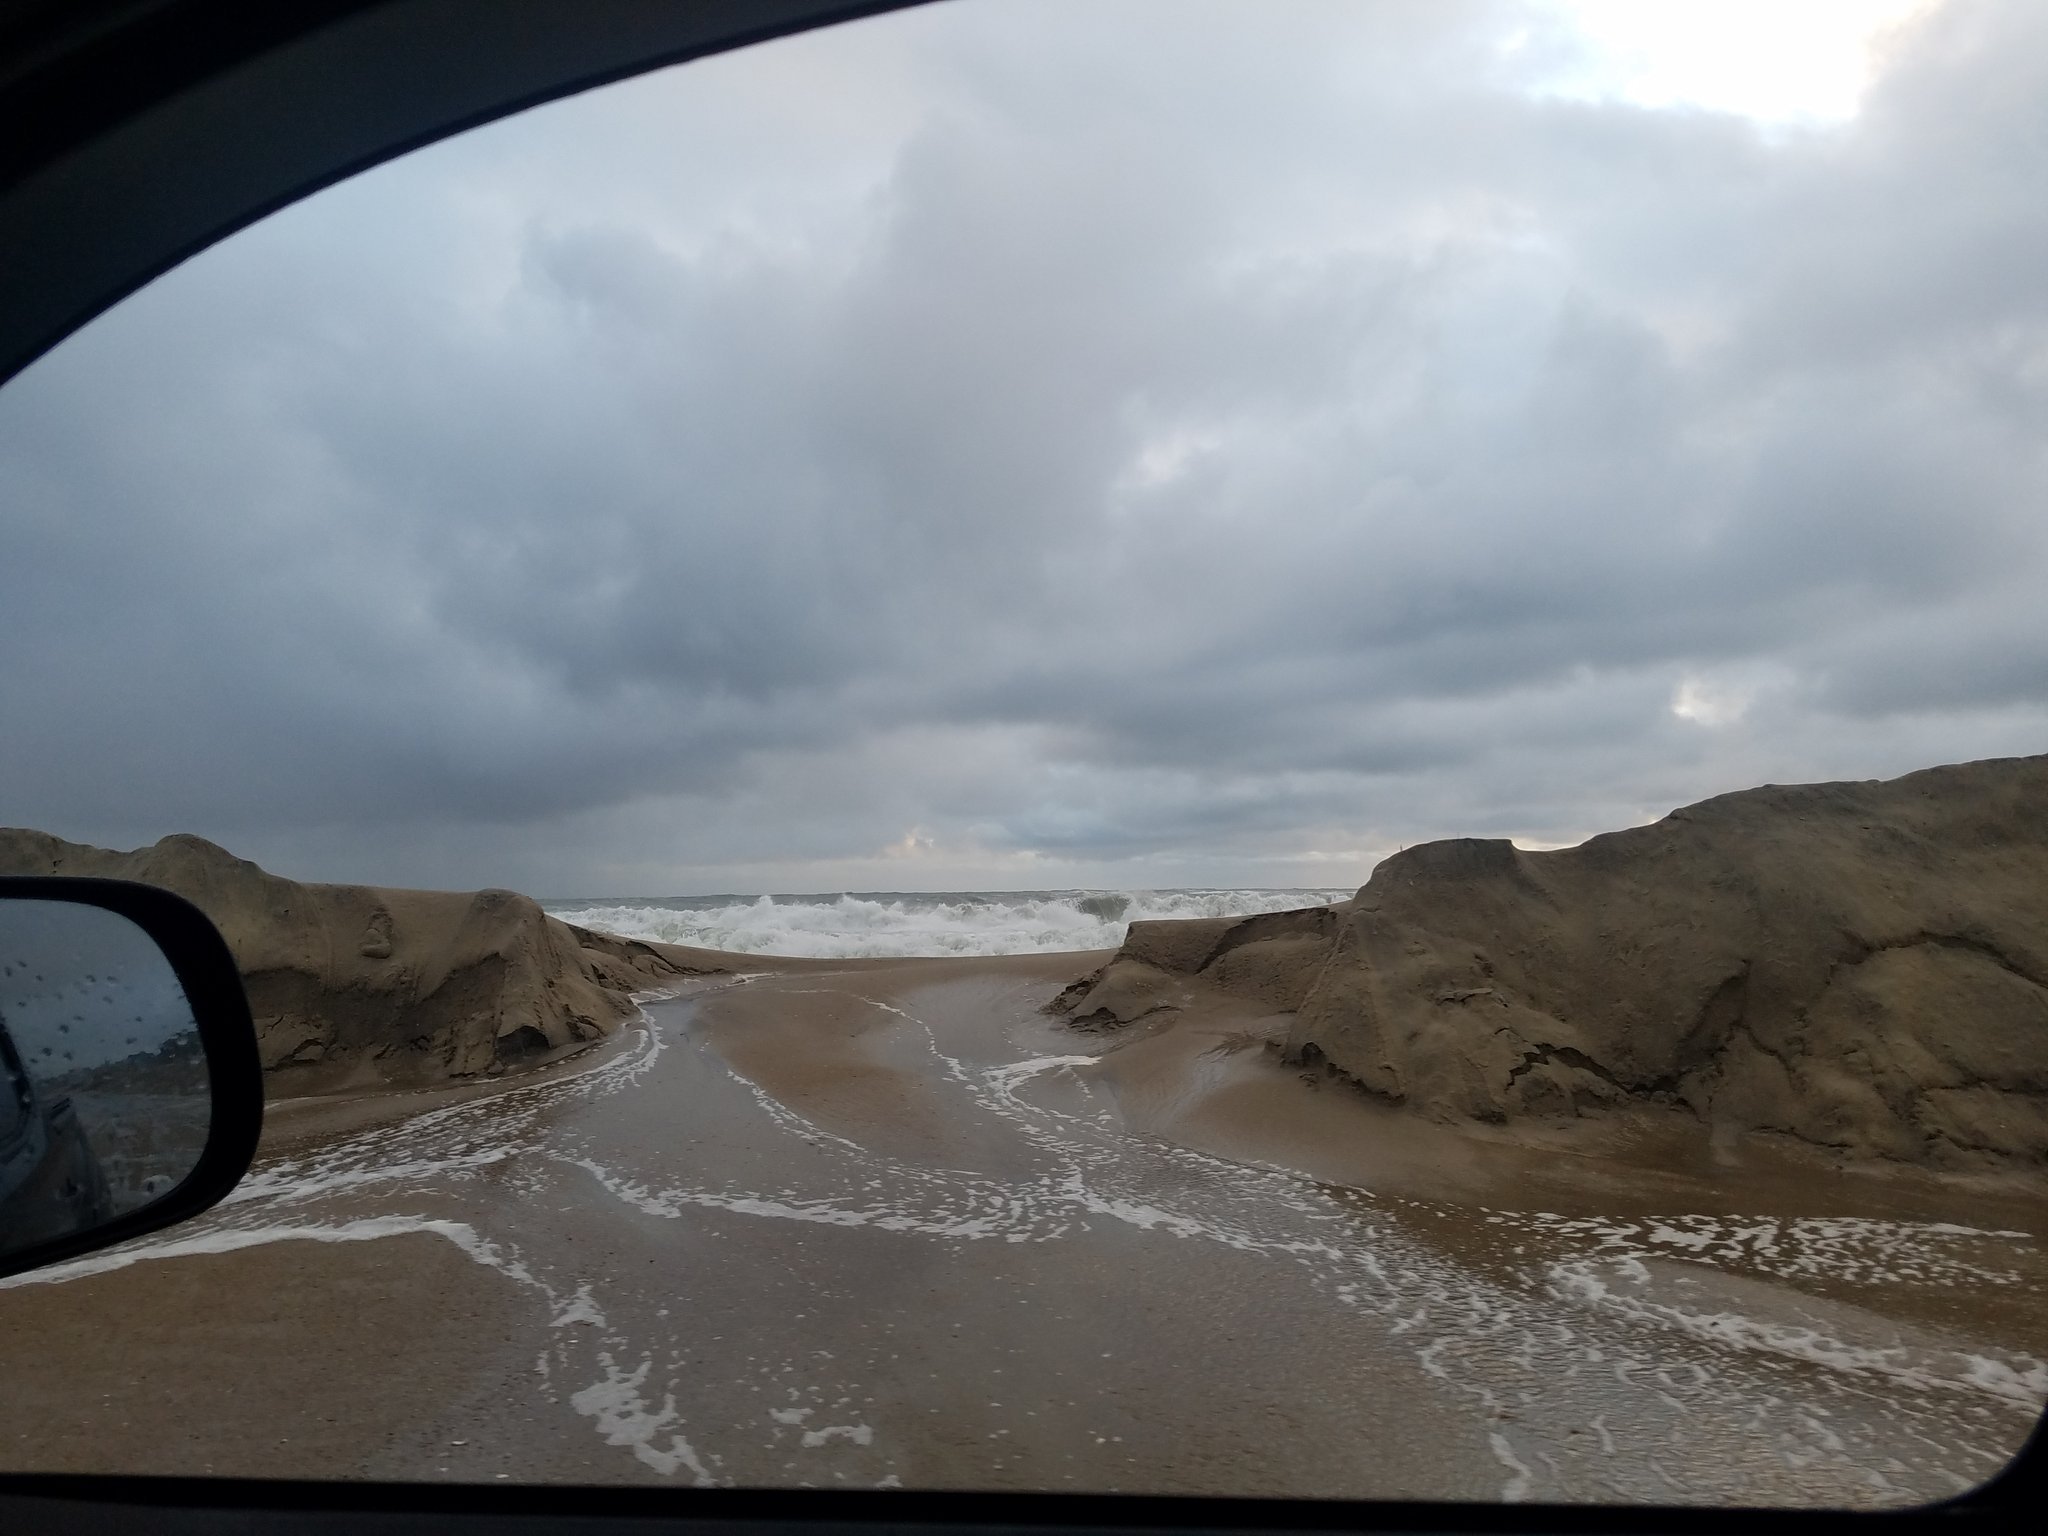 Photo of dune breach north of Rodanthe, NC.